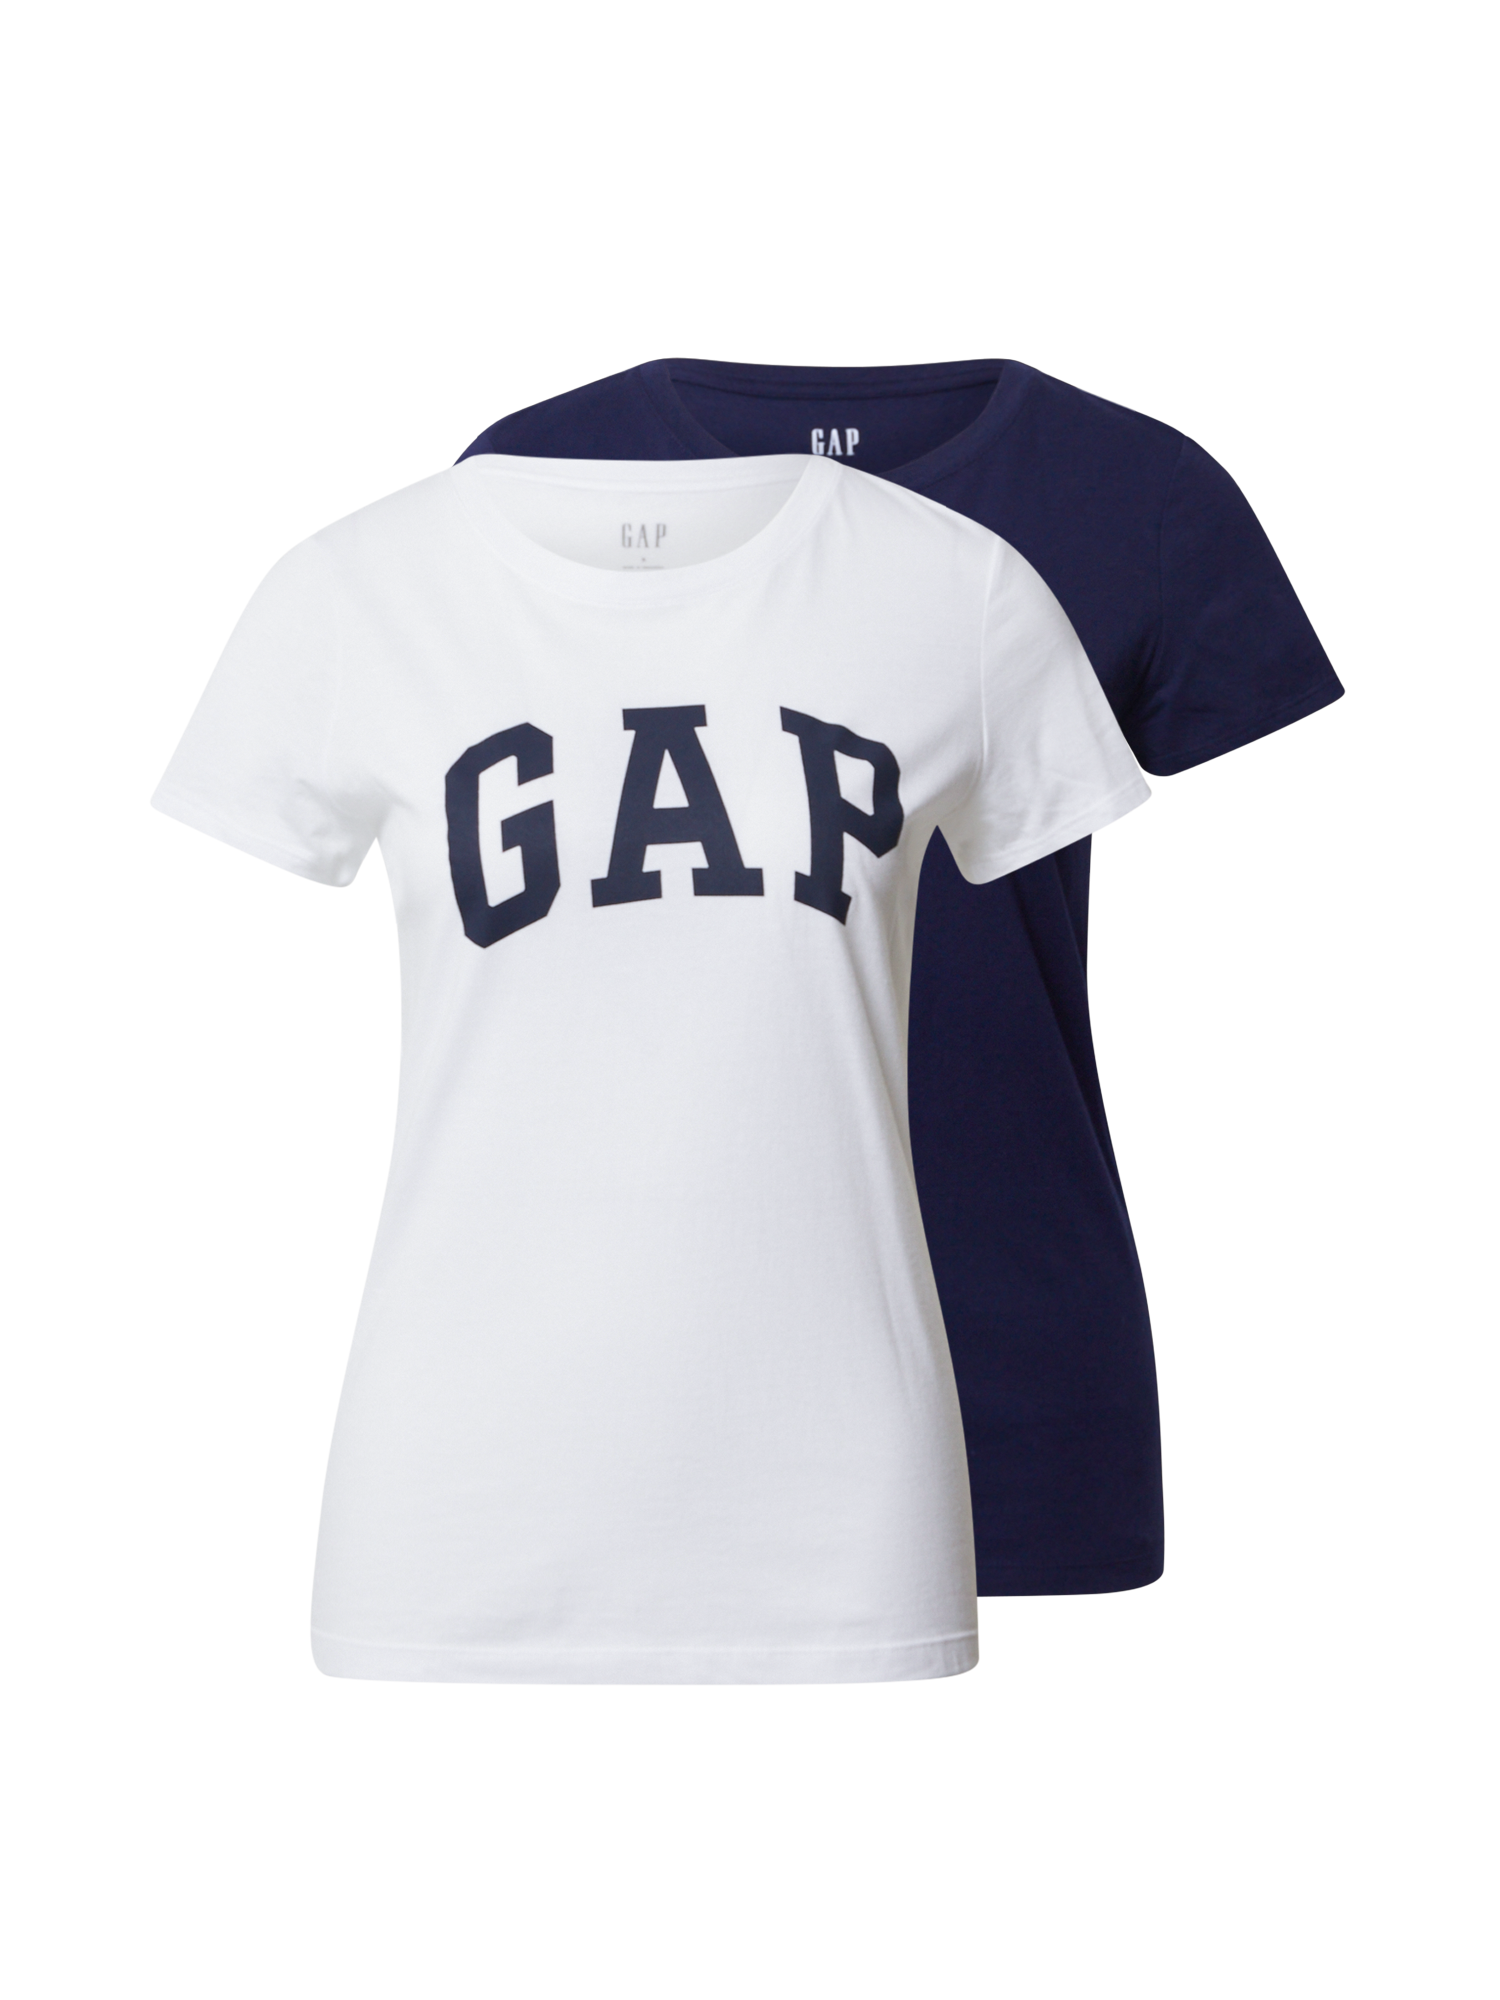 T-shirt FRANCHISE GAP en Bleu Marine, Blanc 